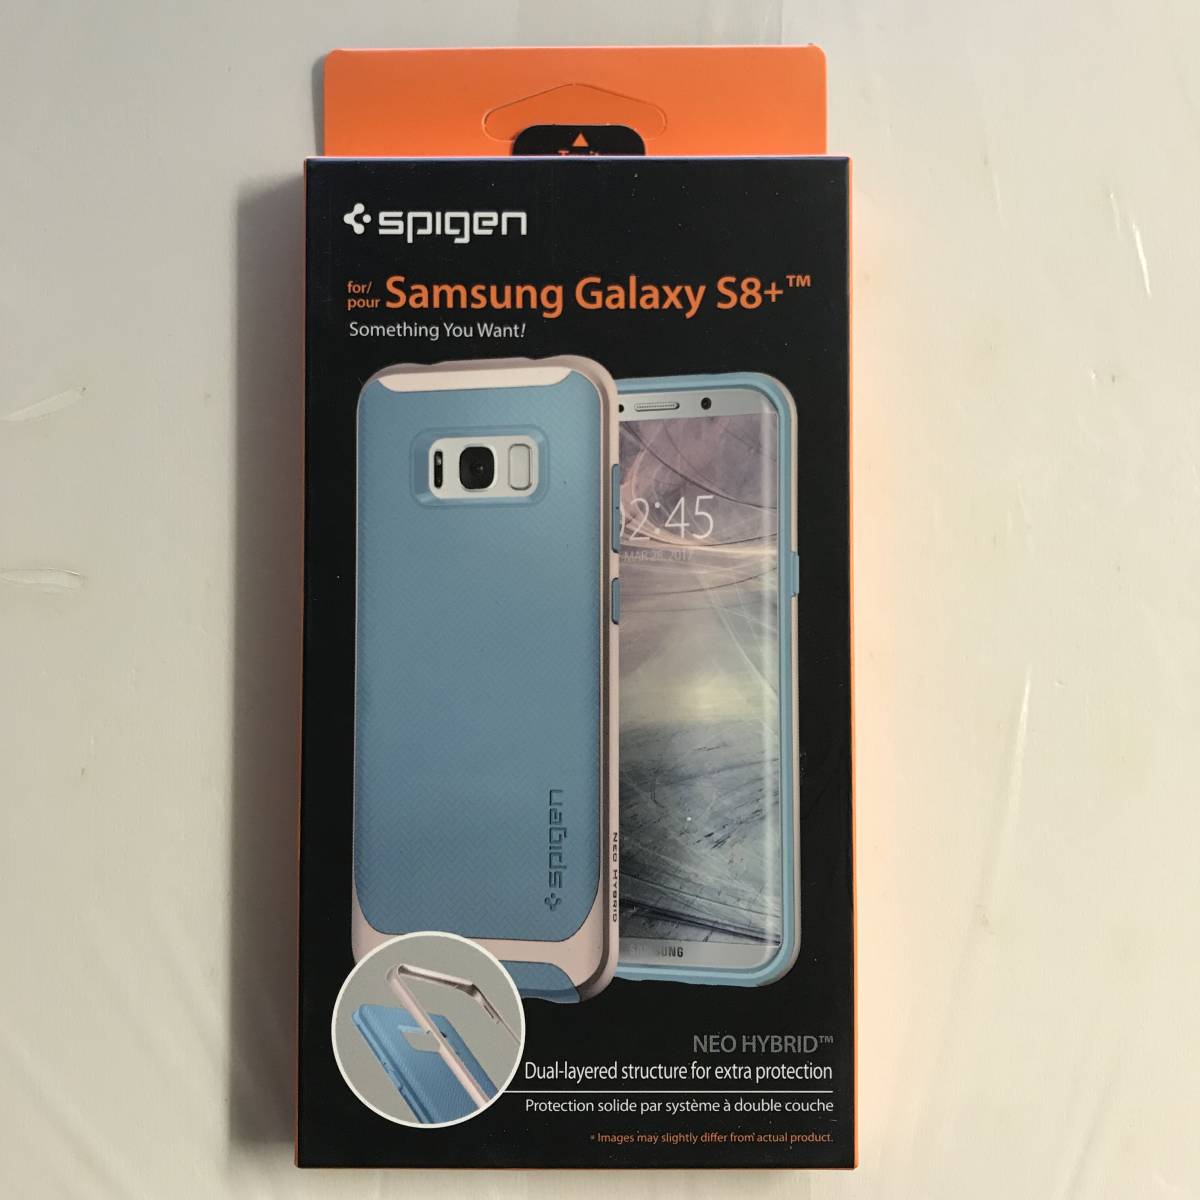 【Spigen】スマホケース Galaxy S8+ Neo Hybrid Niagara Blue @TZ-05@5_画像5